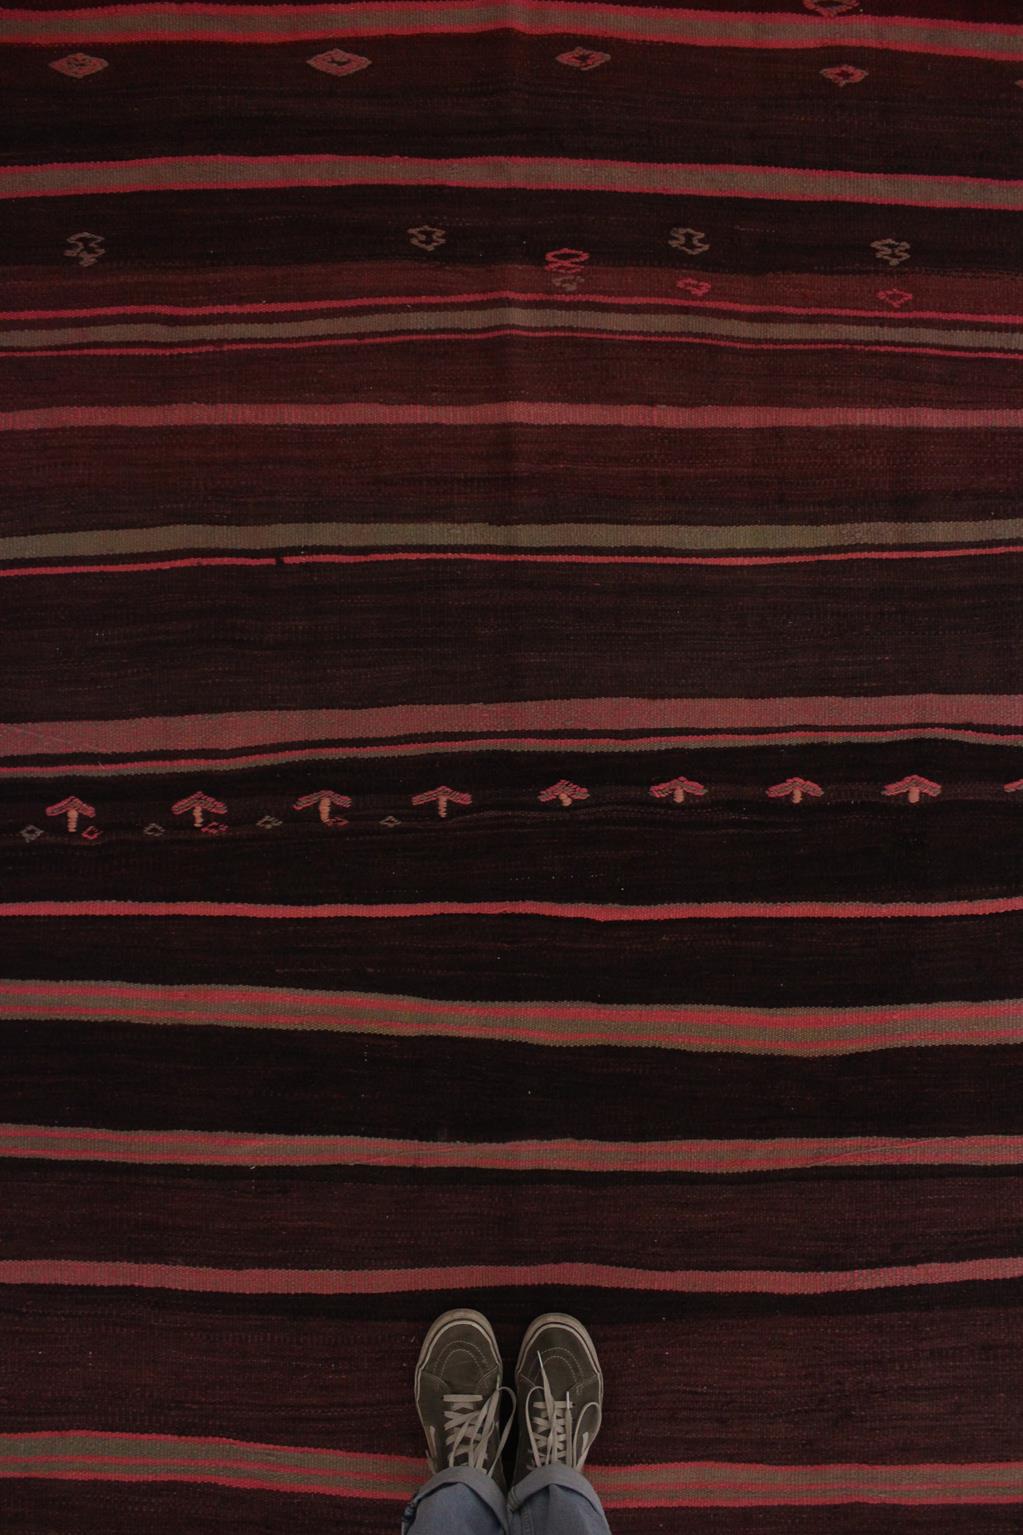 Berber blanket / Kilim 5.8x12.1feet / 178x370cm